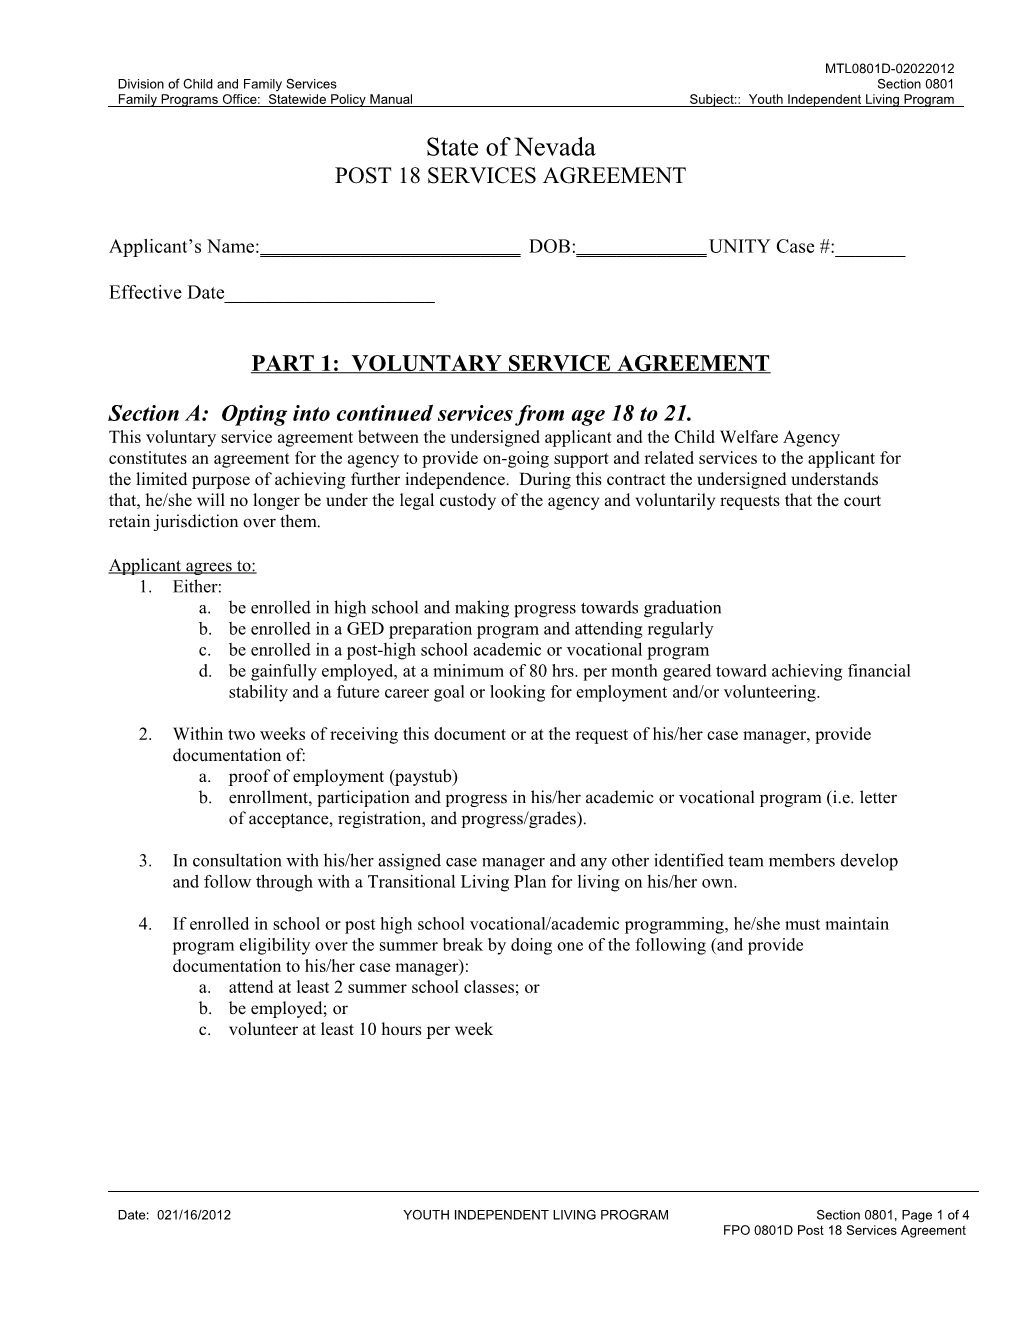 Voluntary Service Agreement